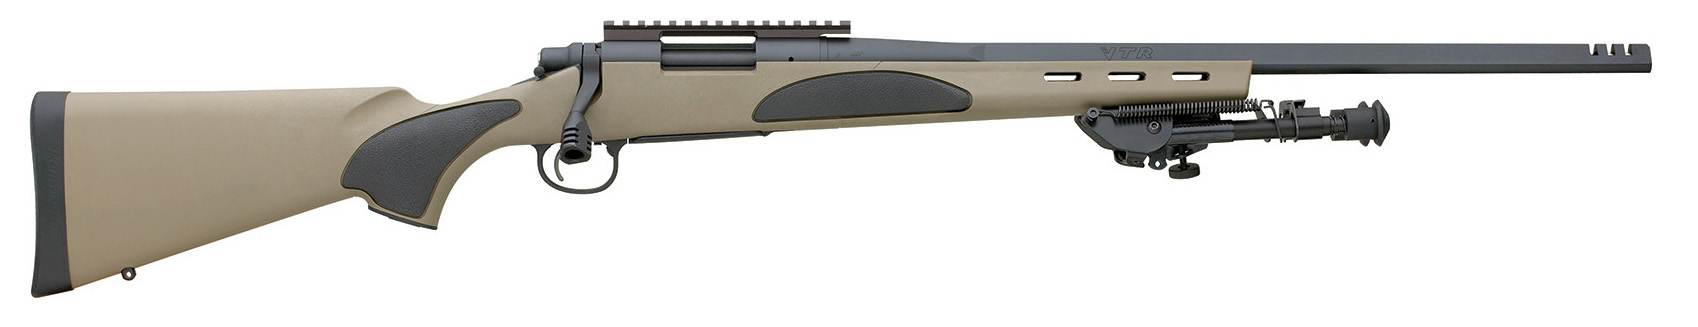 Model 700 VTR (Varmint Tactical Rifle)